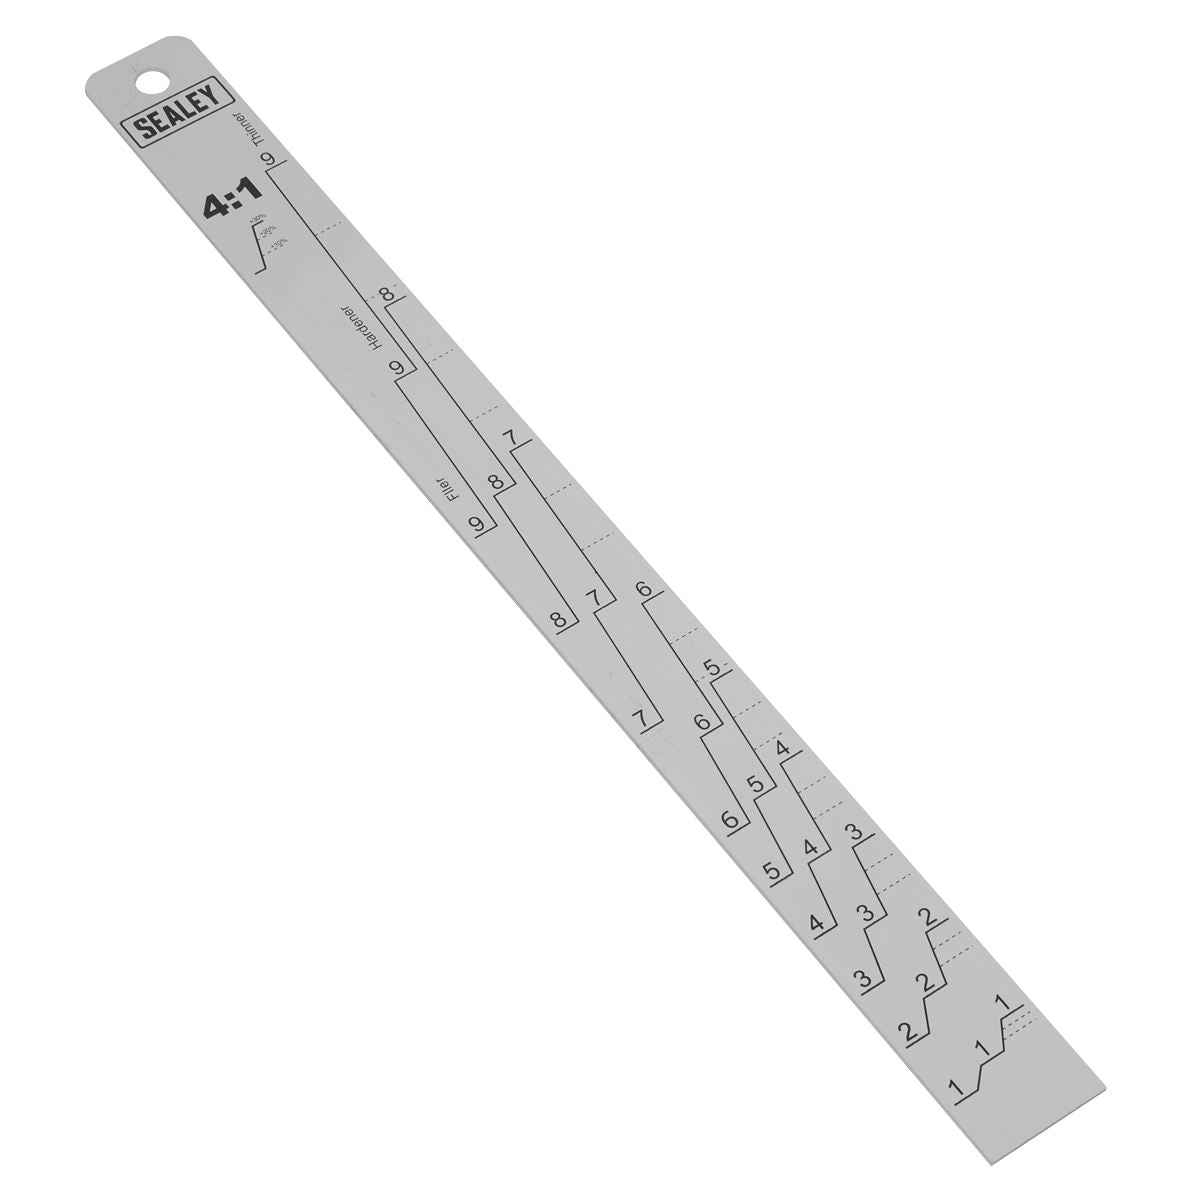 Sealey Aluminium Paint Mixing Measuring Stick 2:1/4:1 Ratio Double Sided